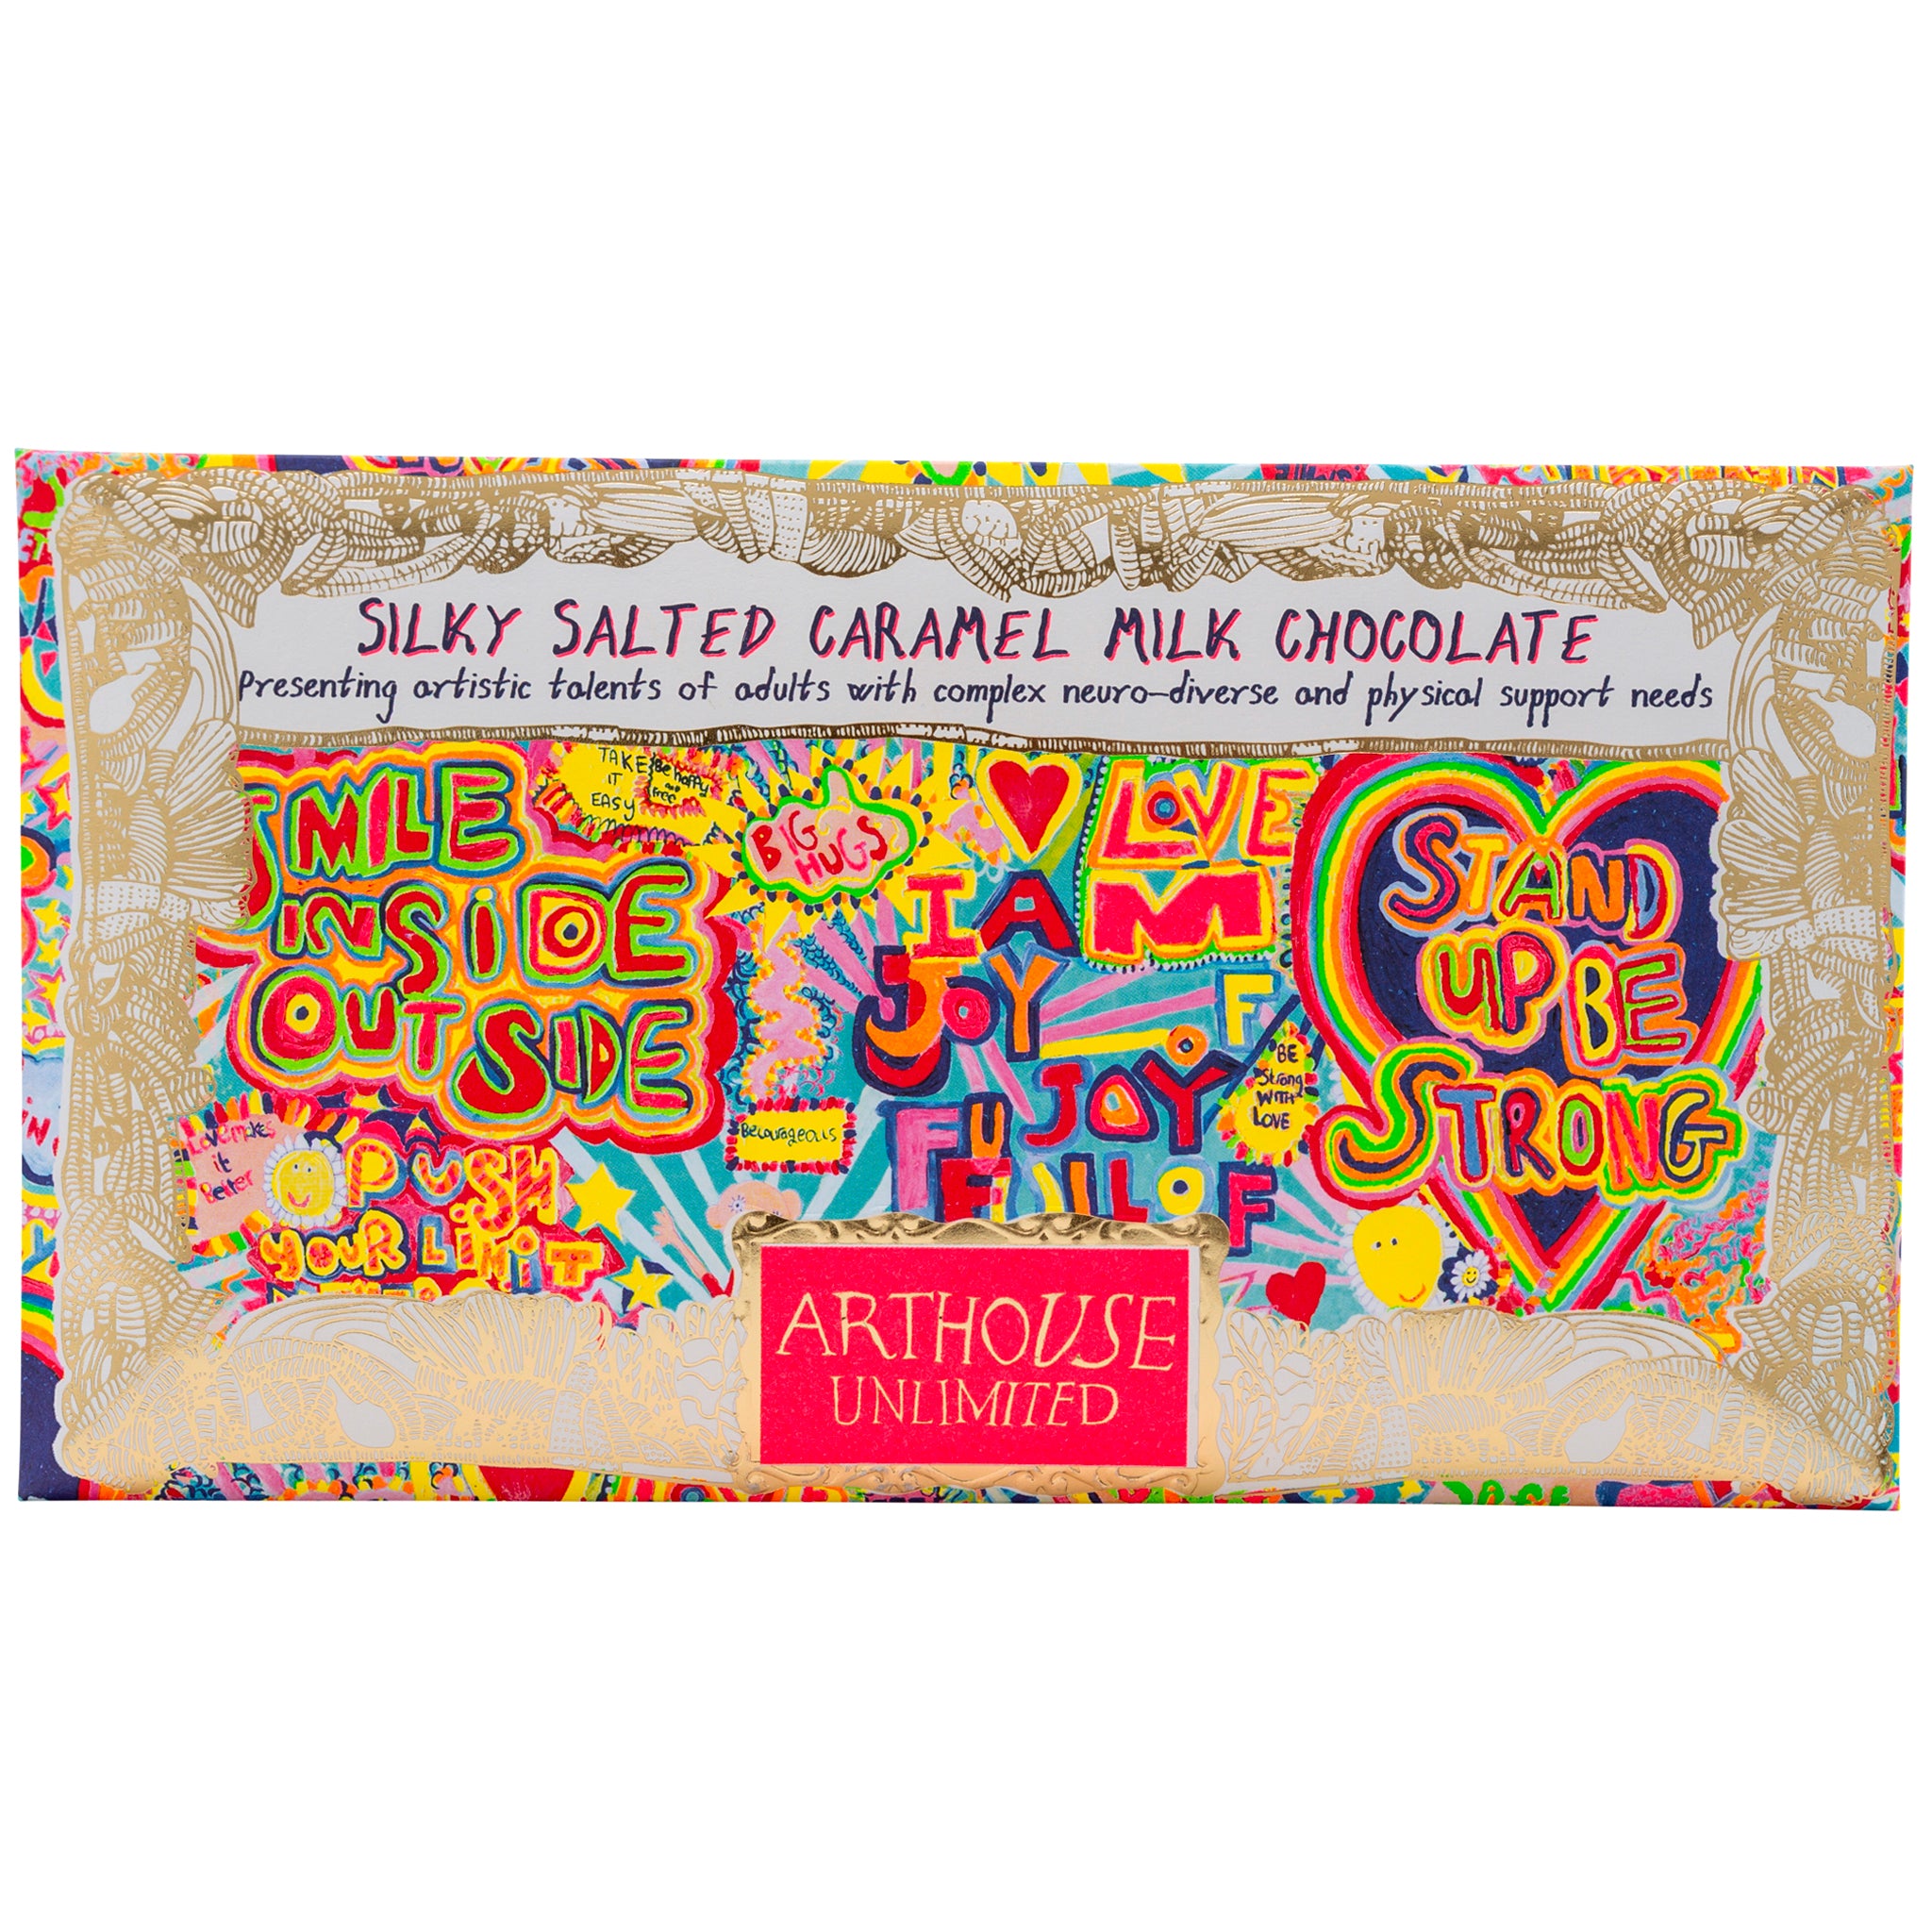 Bright coloured bar of Full of Joy, Silky Salted Caramel Milk Chocolate Bar